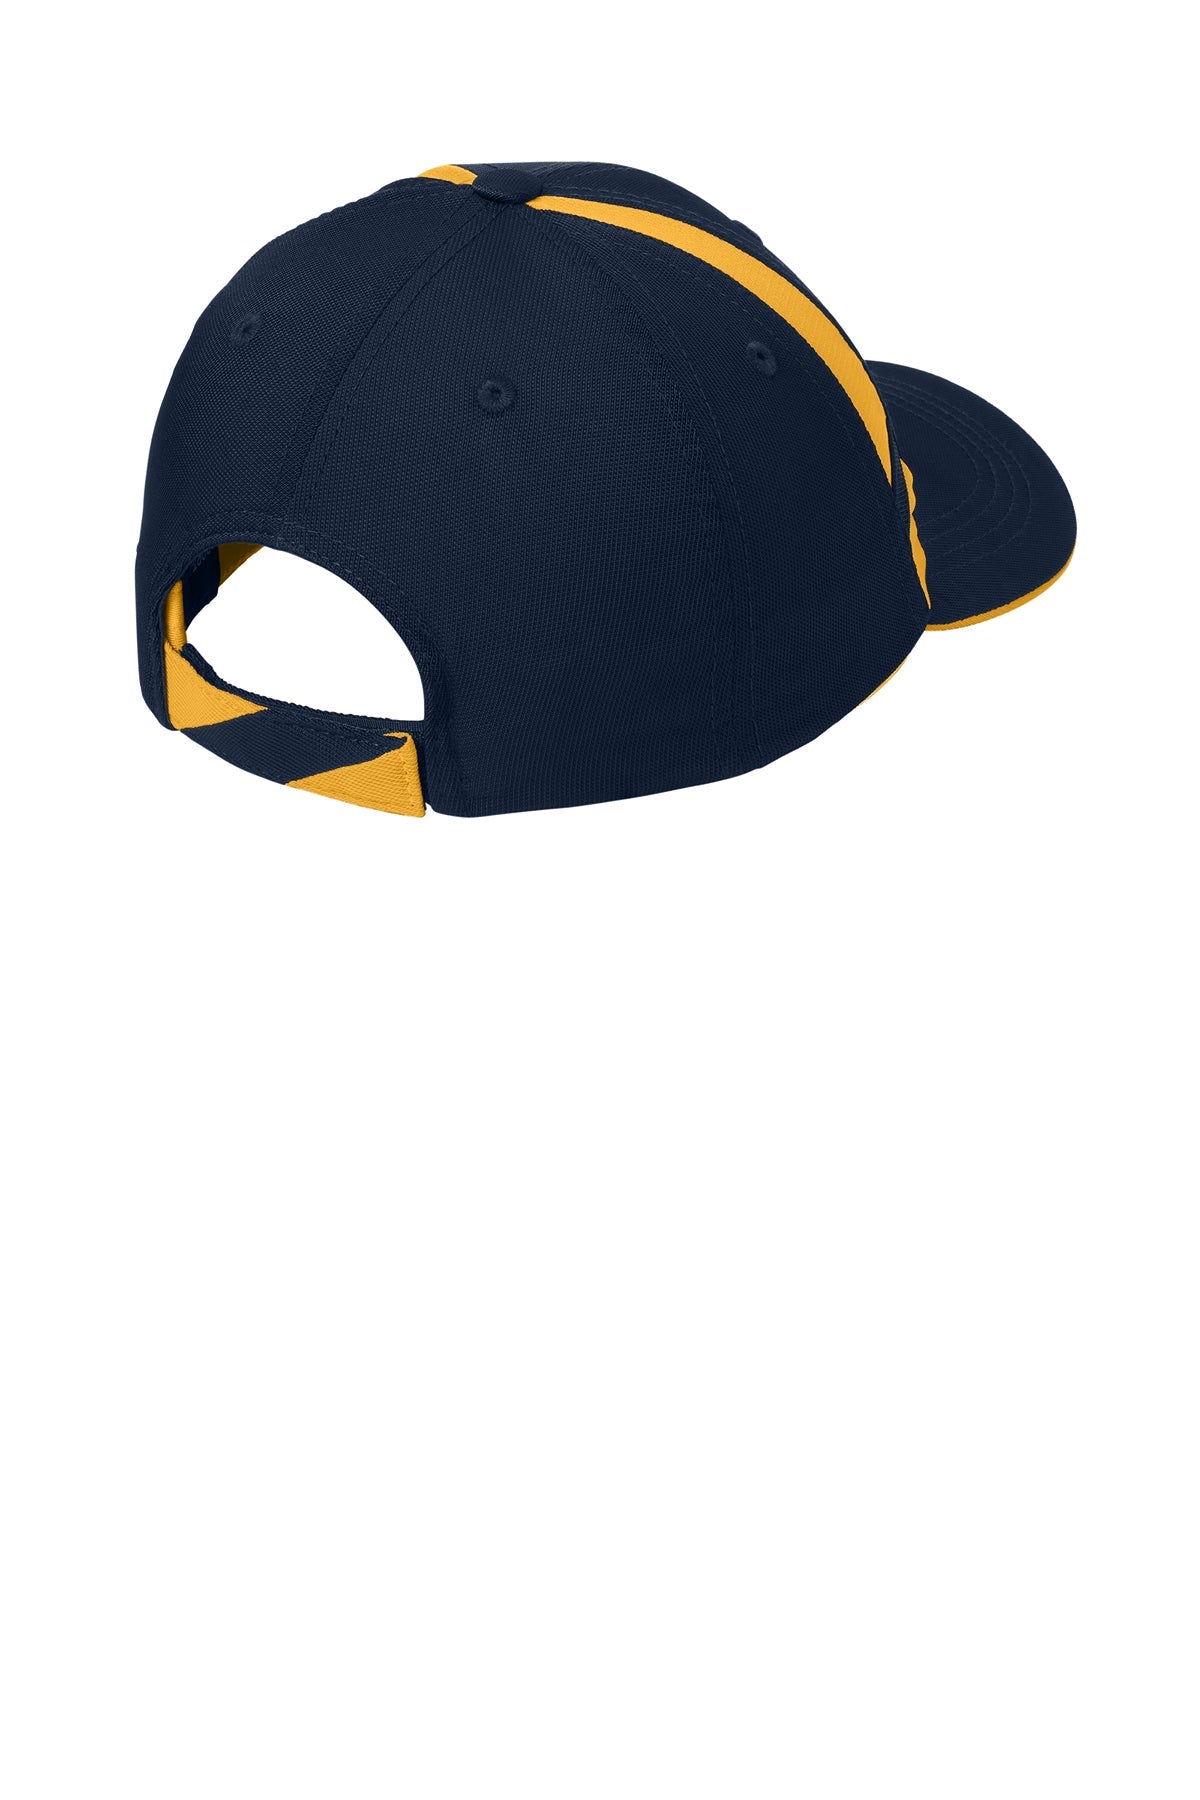 Sport-Tek Dry Zone Customized Mesh Inset Caps, True Navy/Gold